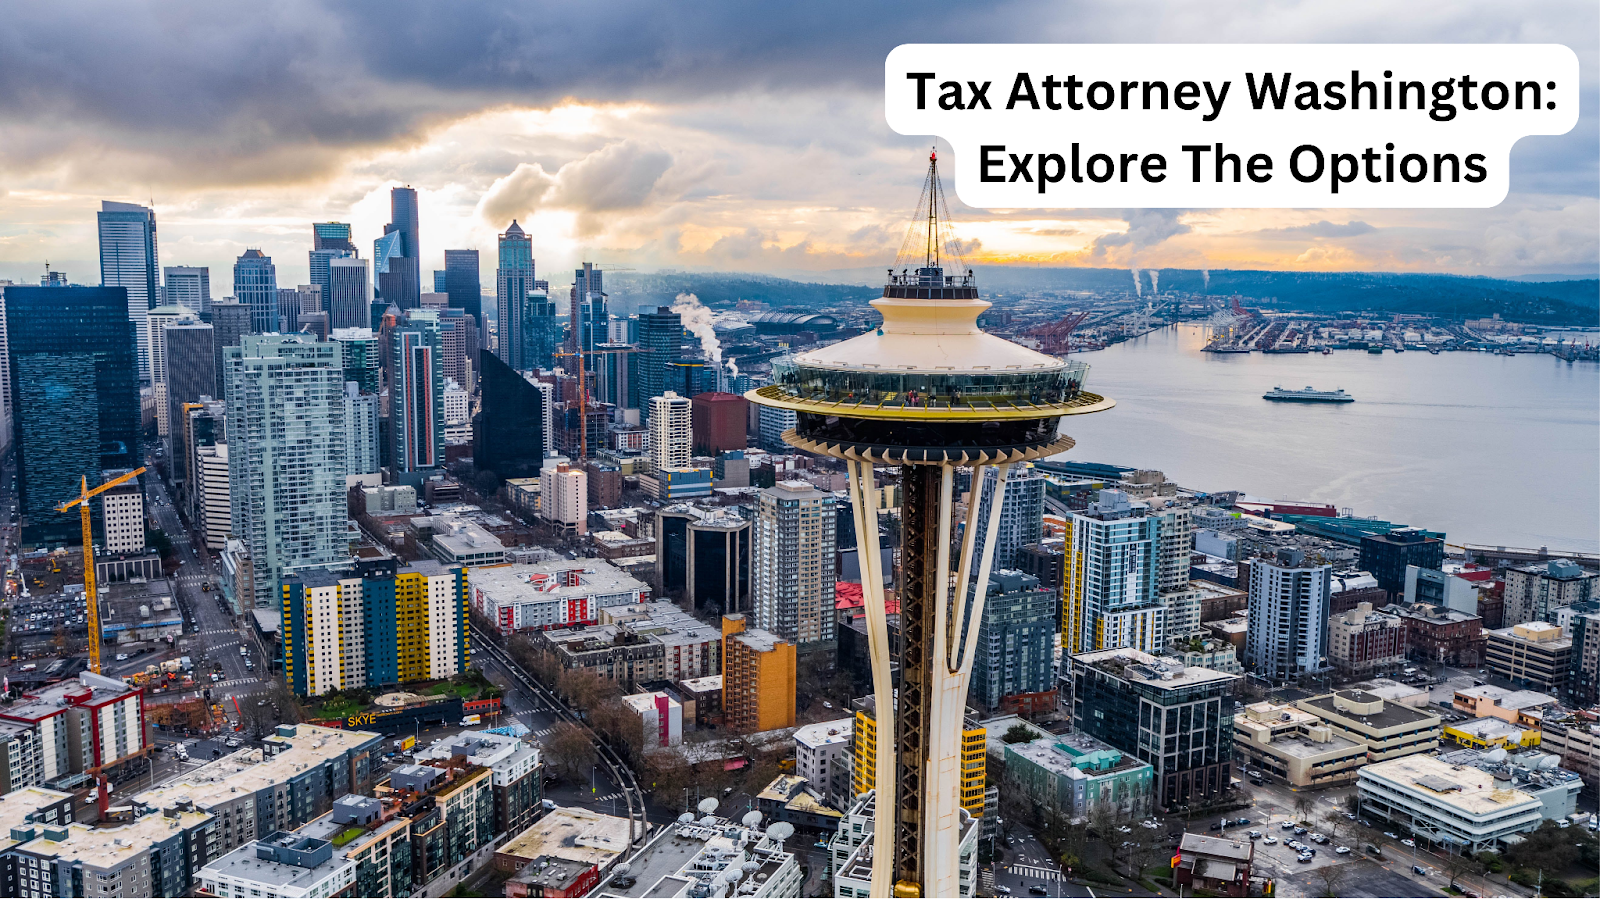 Tax Attorney Washington: Explore The Options